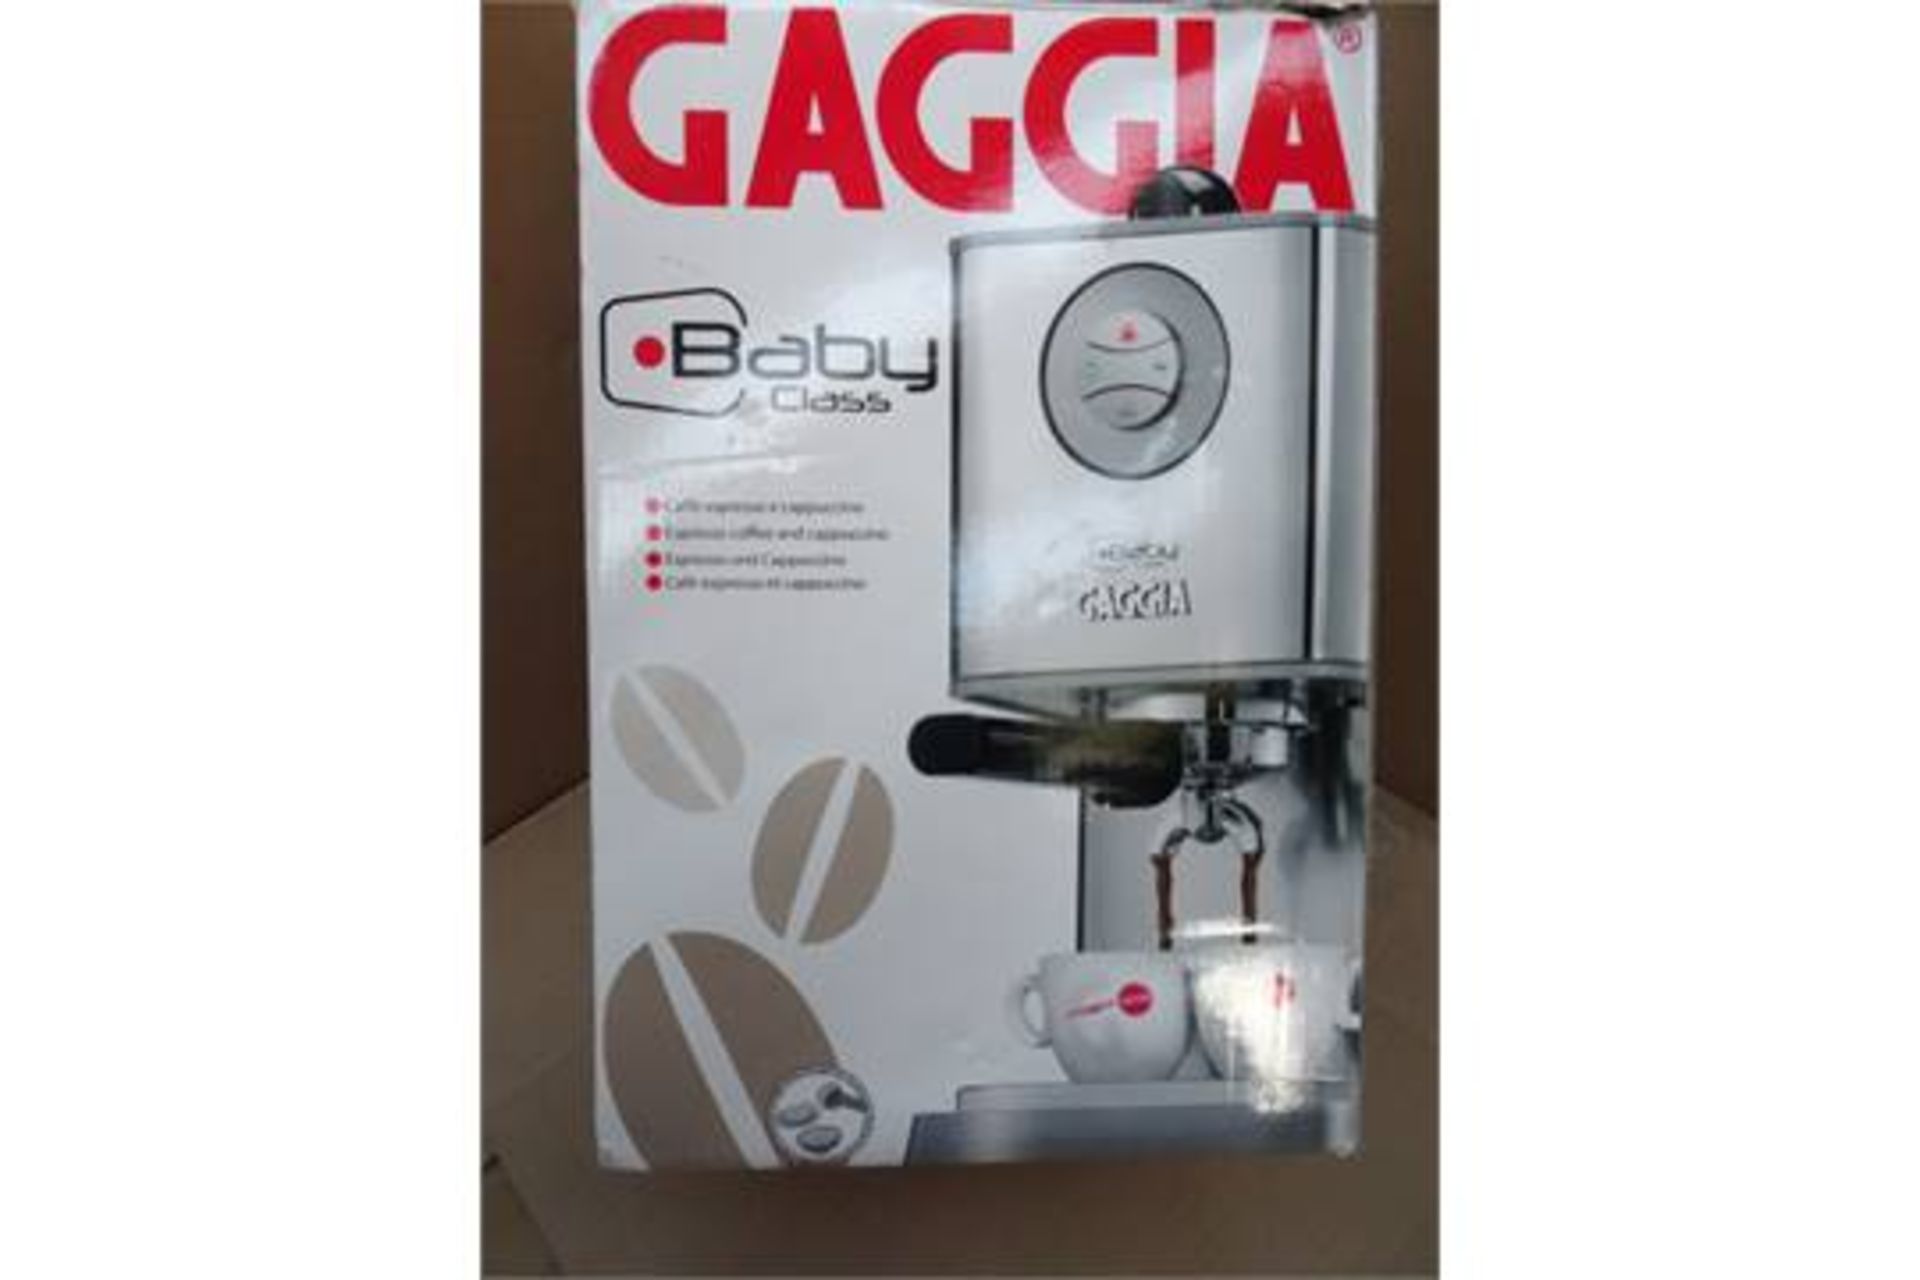 1 x Gaggia Twin Baby Class R18157/40 Manual Coffee Machine. •Dimensions: 24.5x40x26.5cm
•Material: